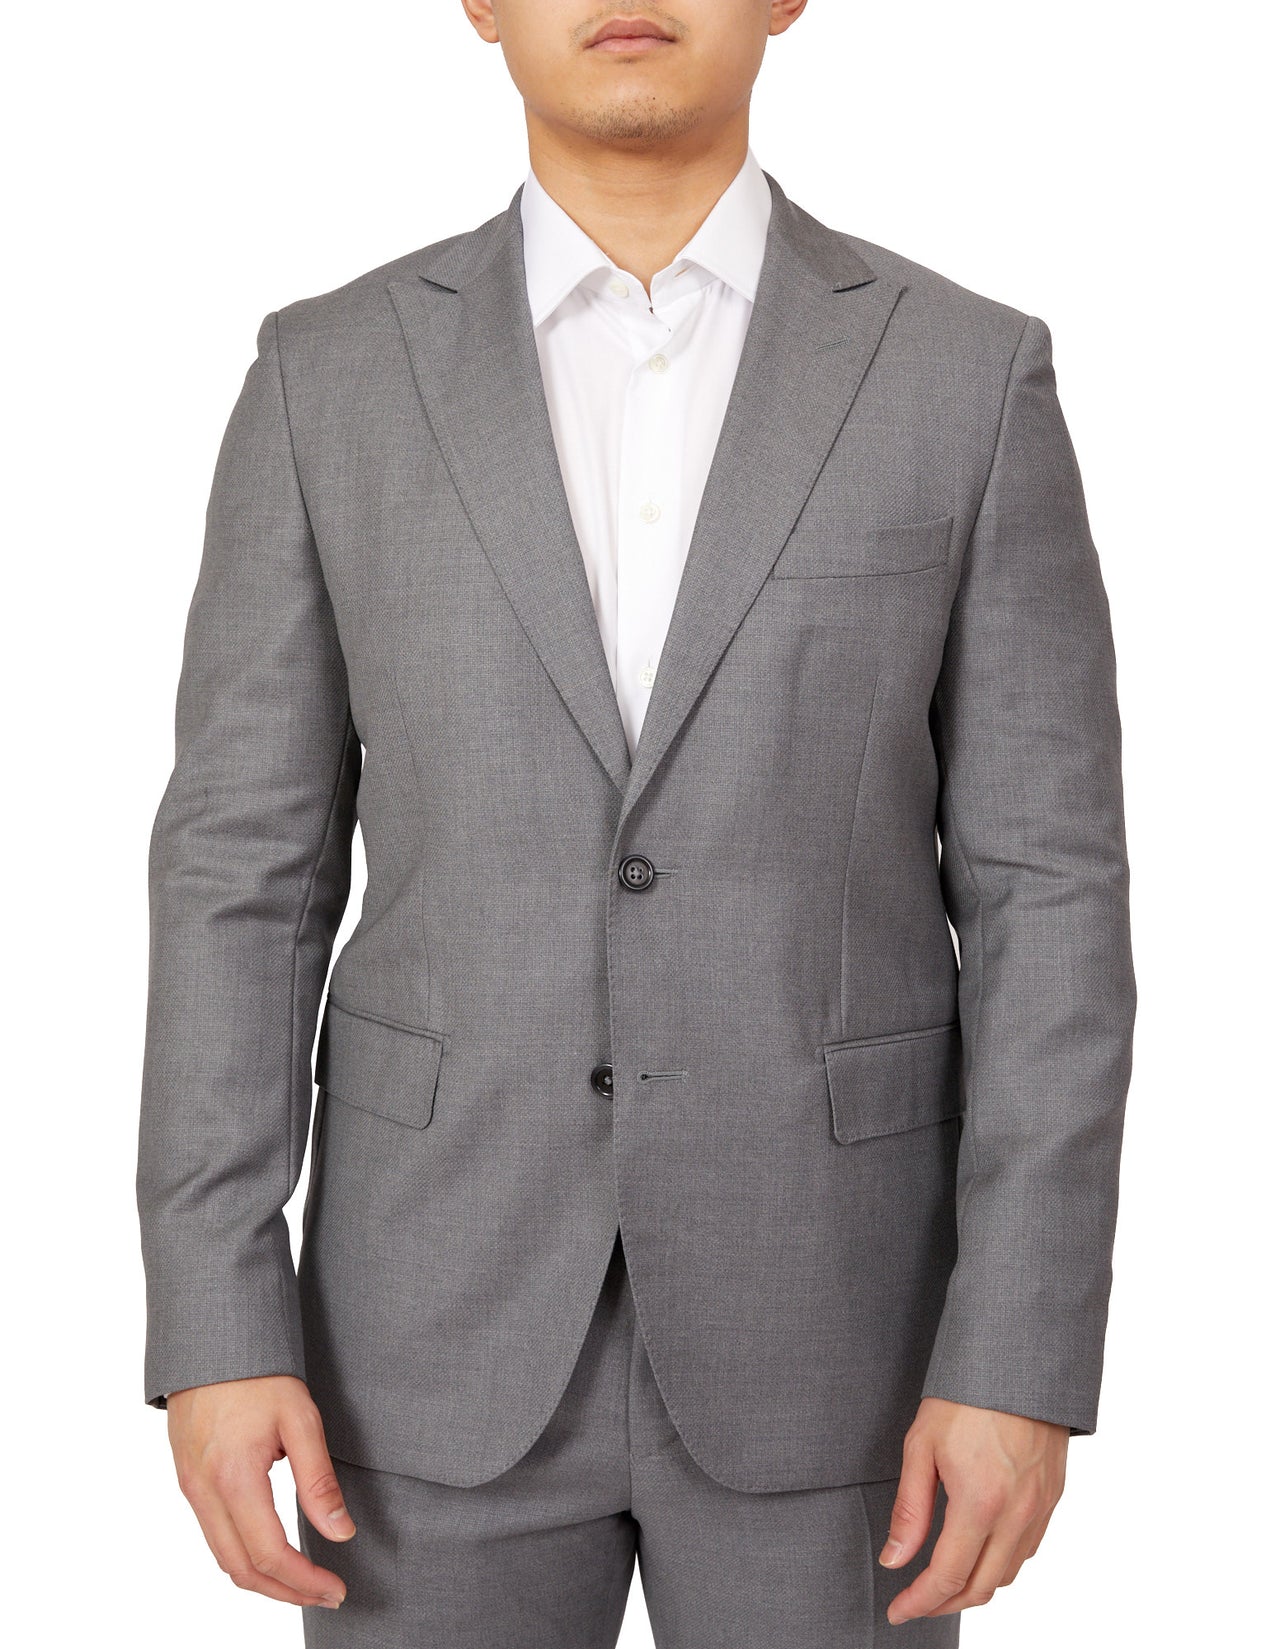 HENRY SARTORIAL Peak Lapel Micro Weave Suit GREY LG